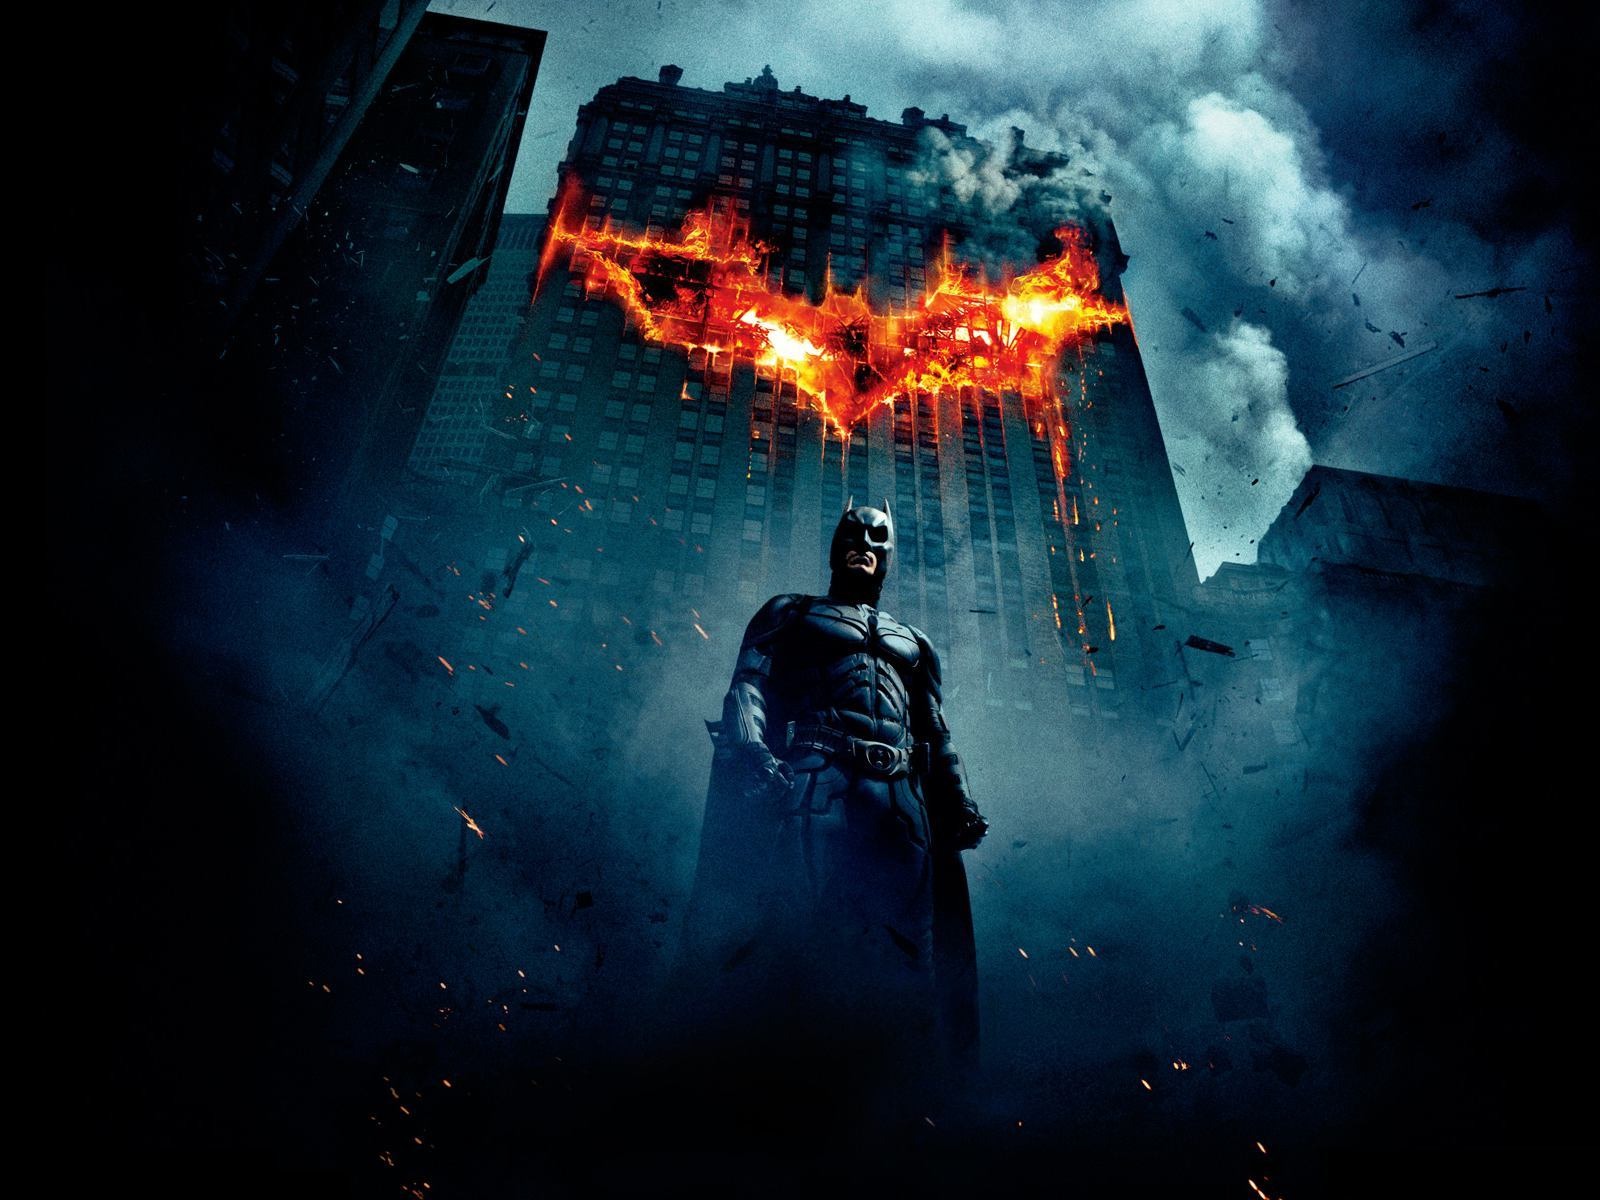 Batman: The Dark Knight Backgrounds on Wallpapers Vista